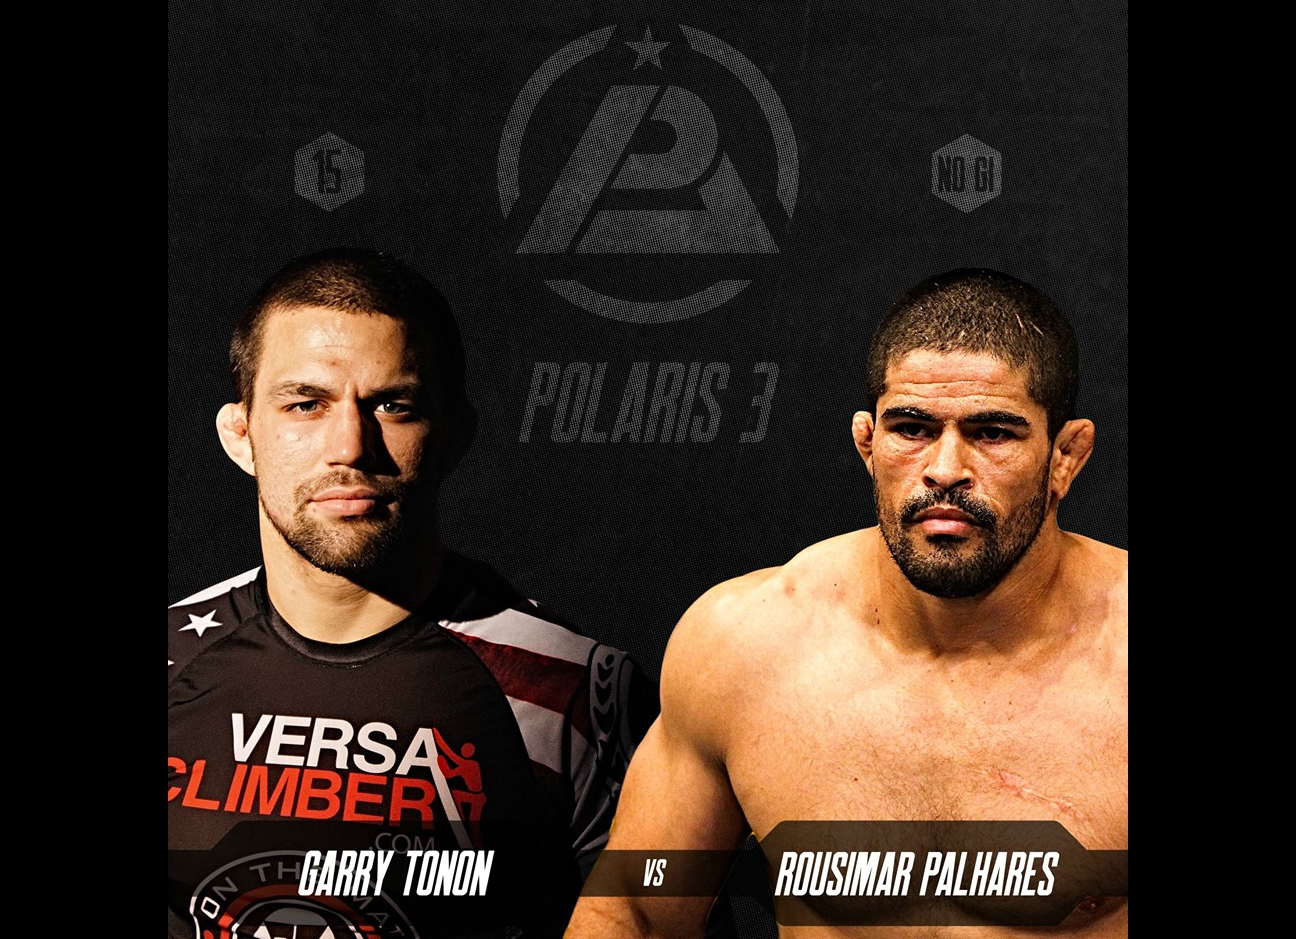 Garry Tonon vs Rousimar Palhares, Sub Only Confirmed at Polaris Pro 3